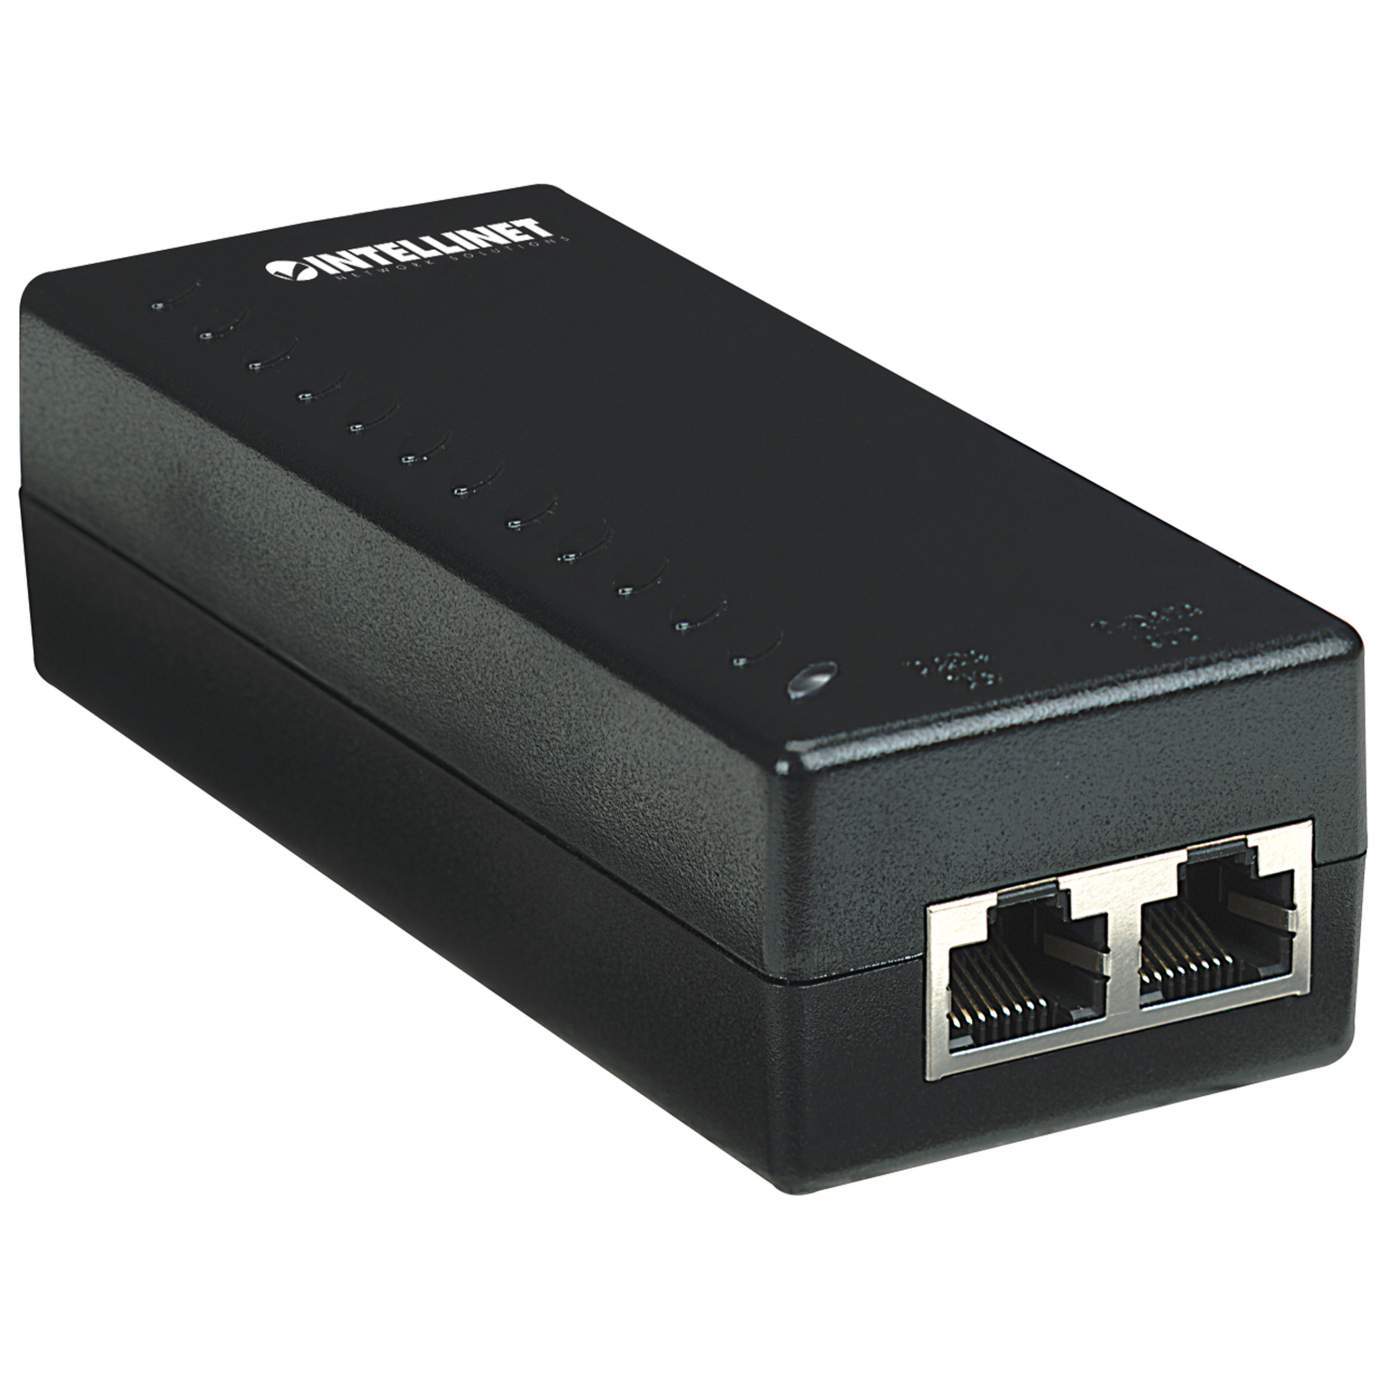 8 LAN Multi POE Port Power Over Ethernet PoE injector Adapter for